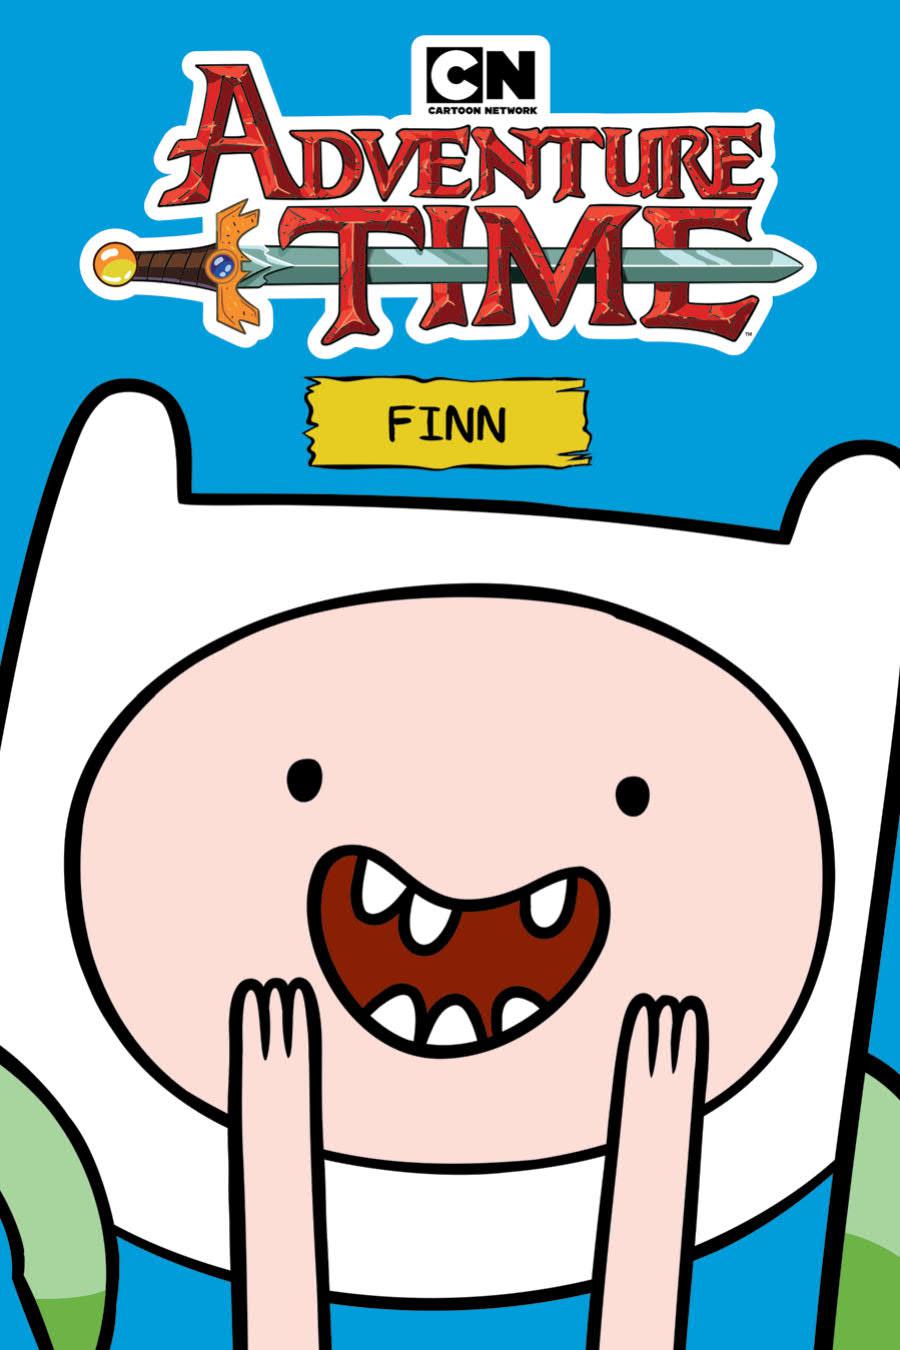 Adventure Time Finn GN